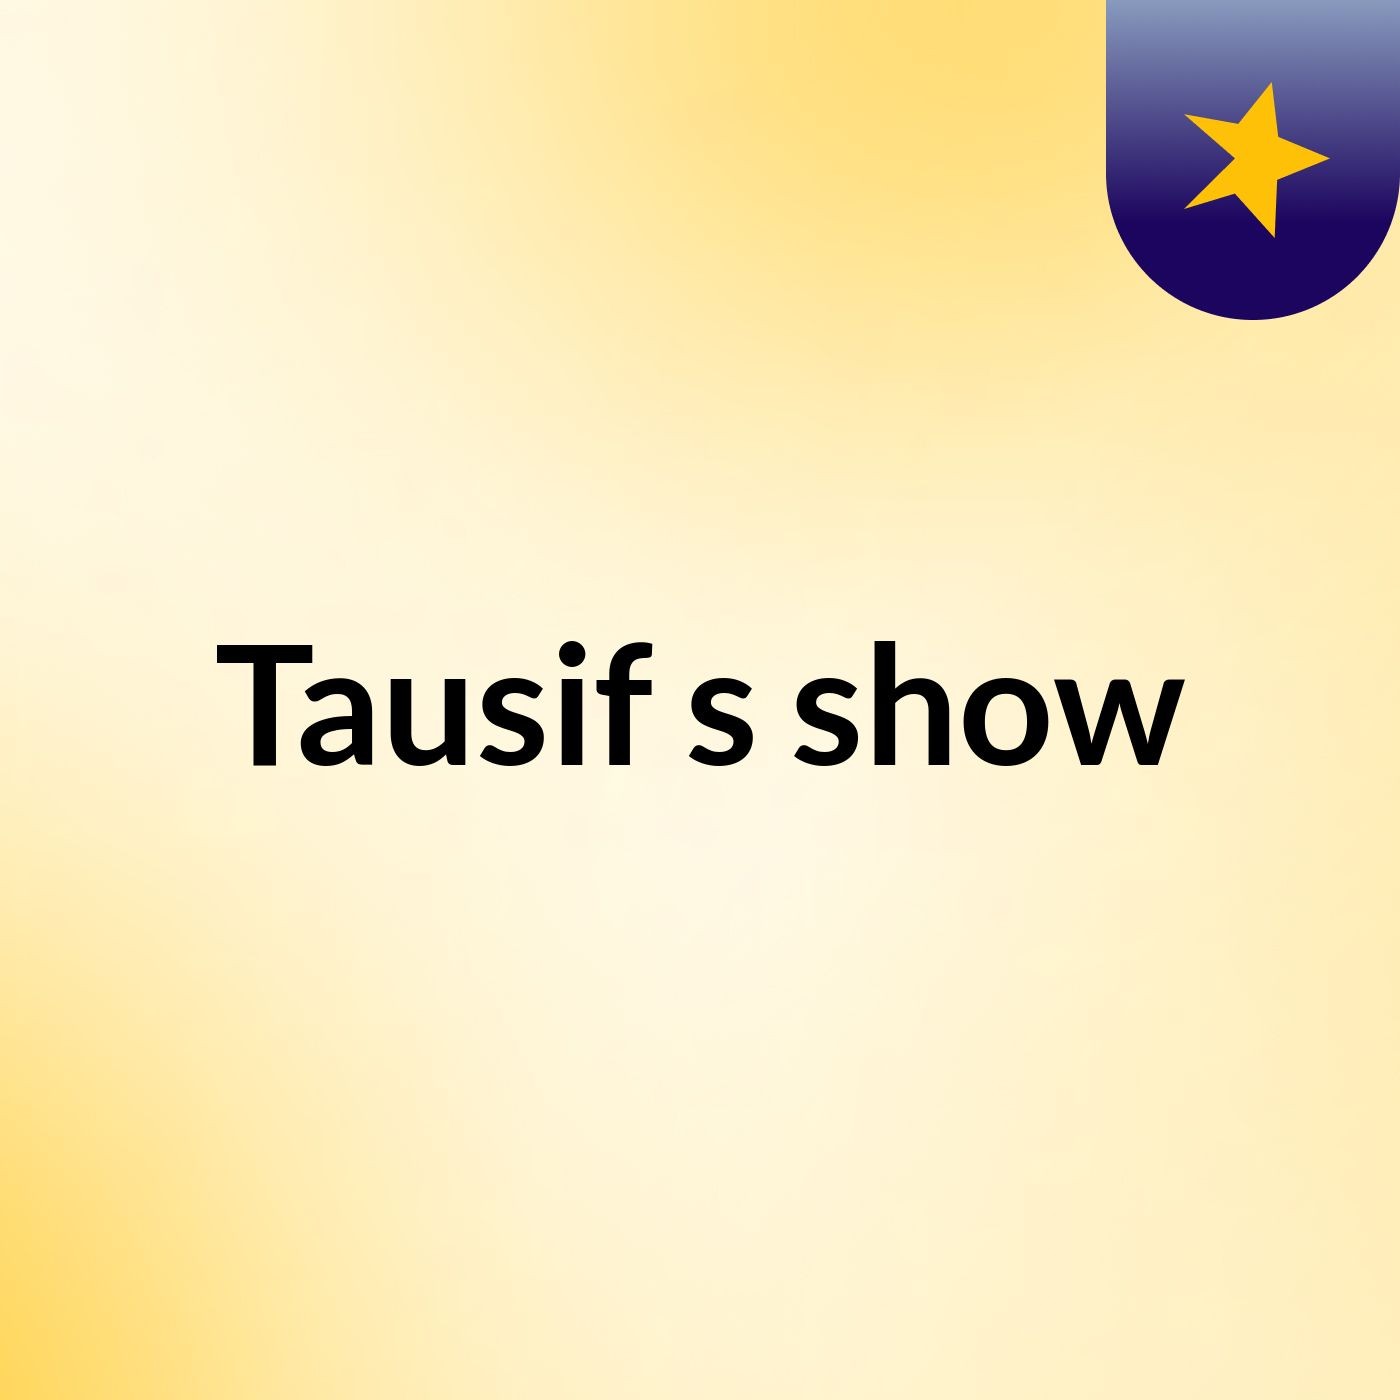 Tausif's show